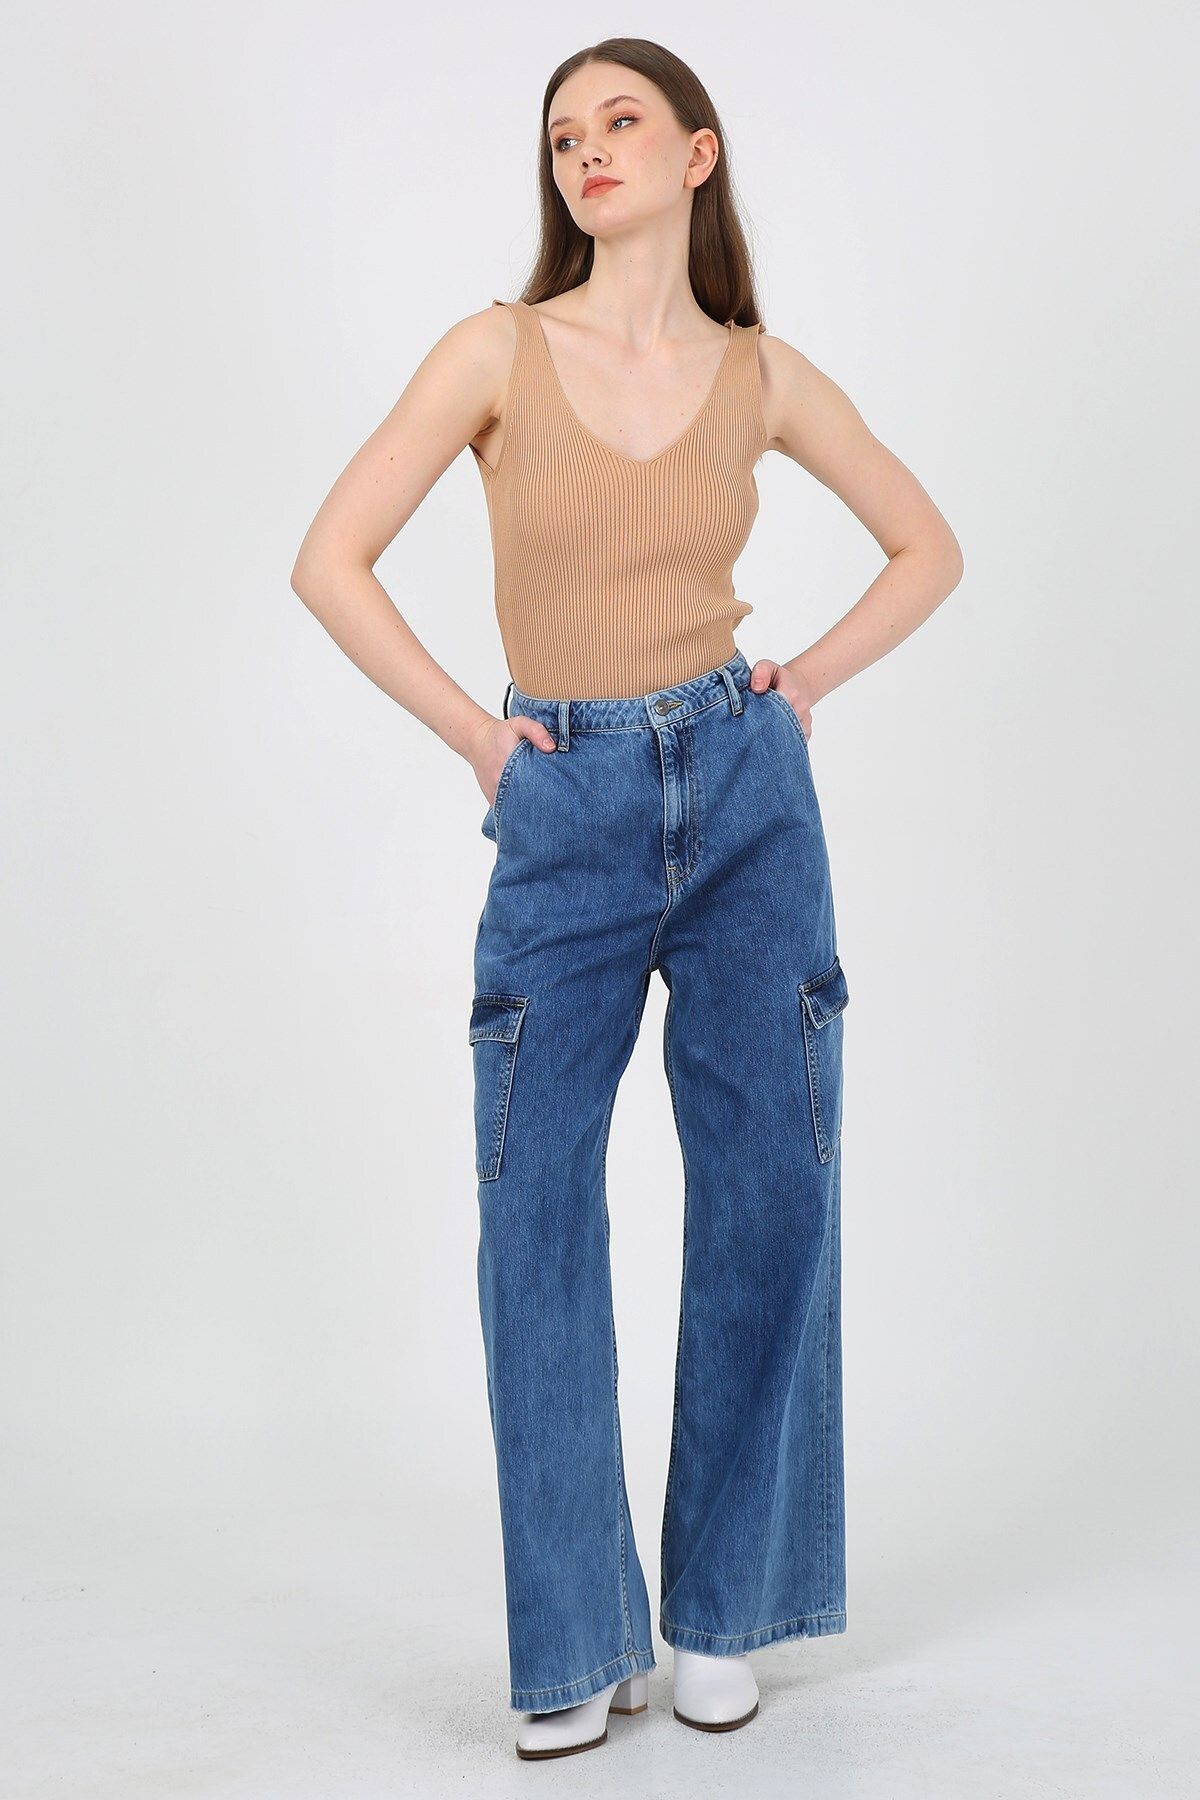 Twister Jeans Kadın Pantolon Paris 9414-02 Blue